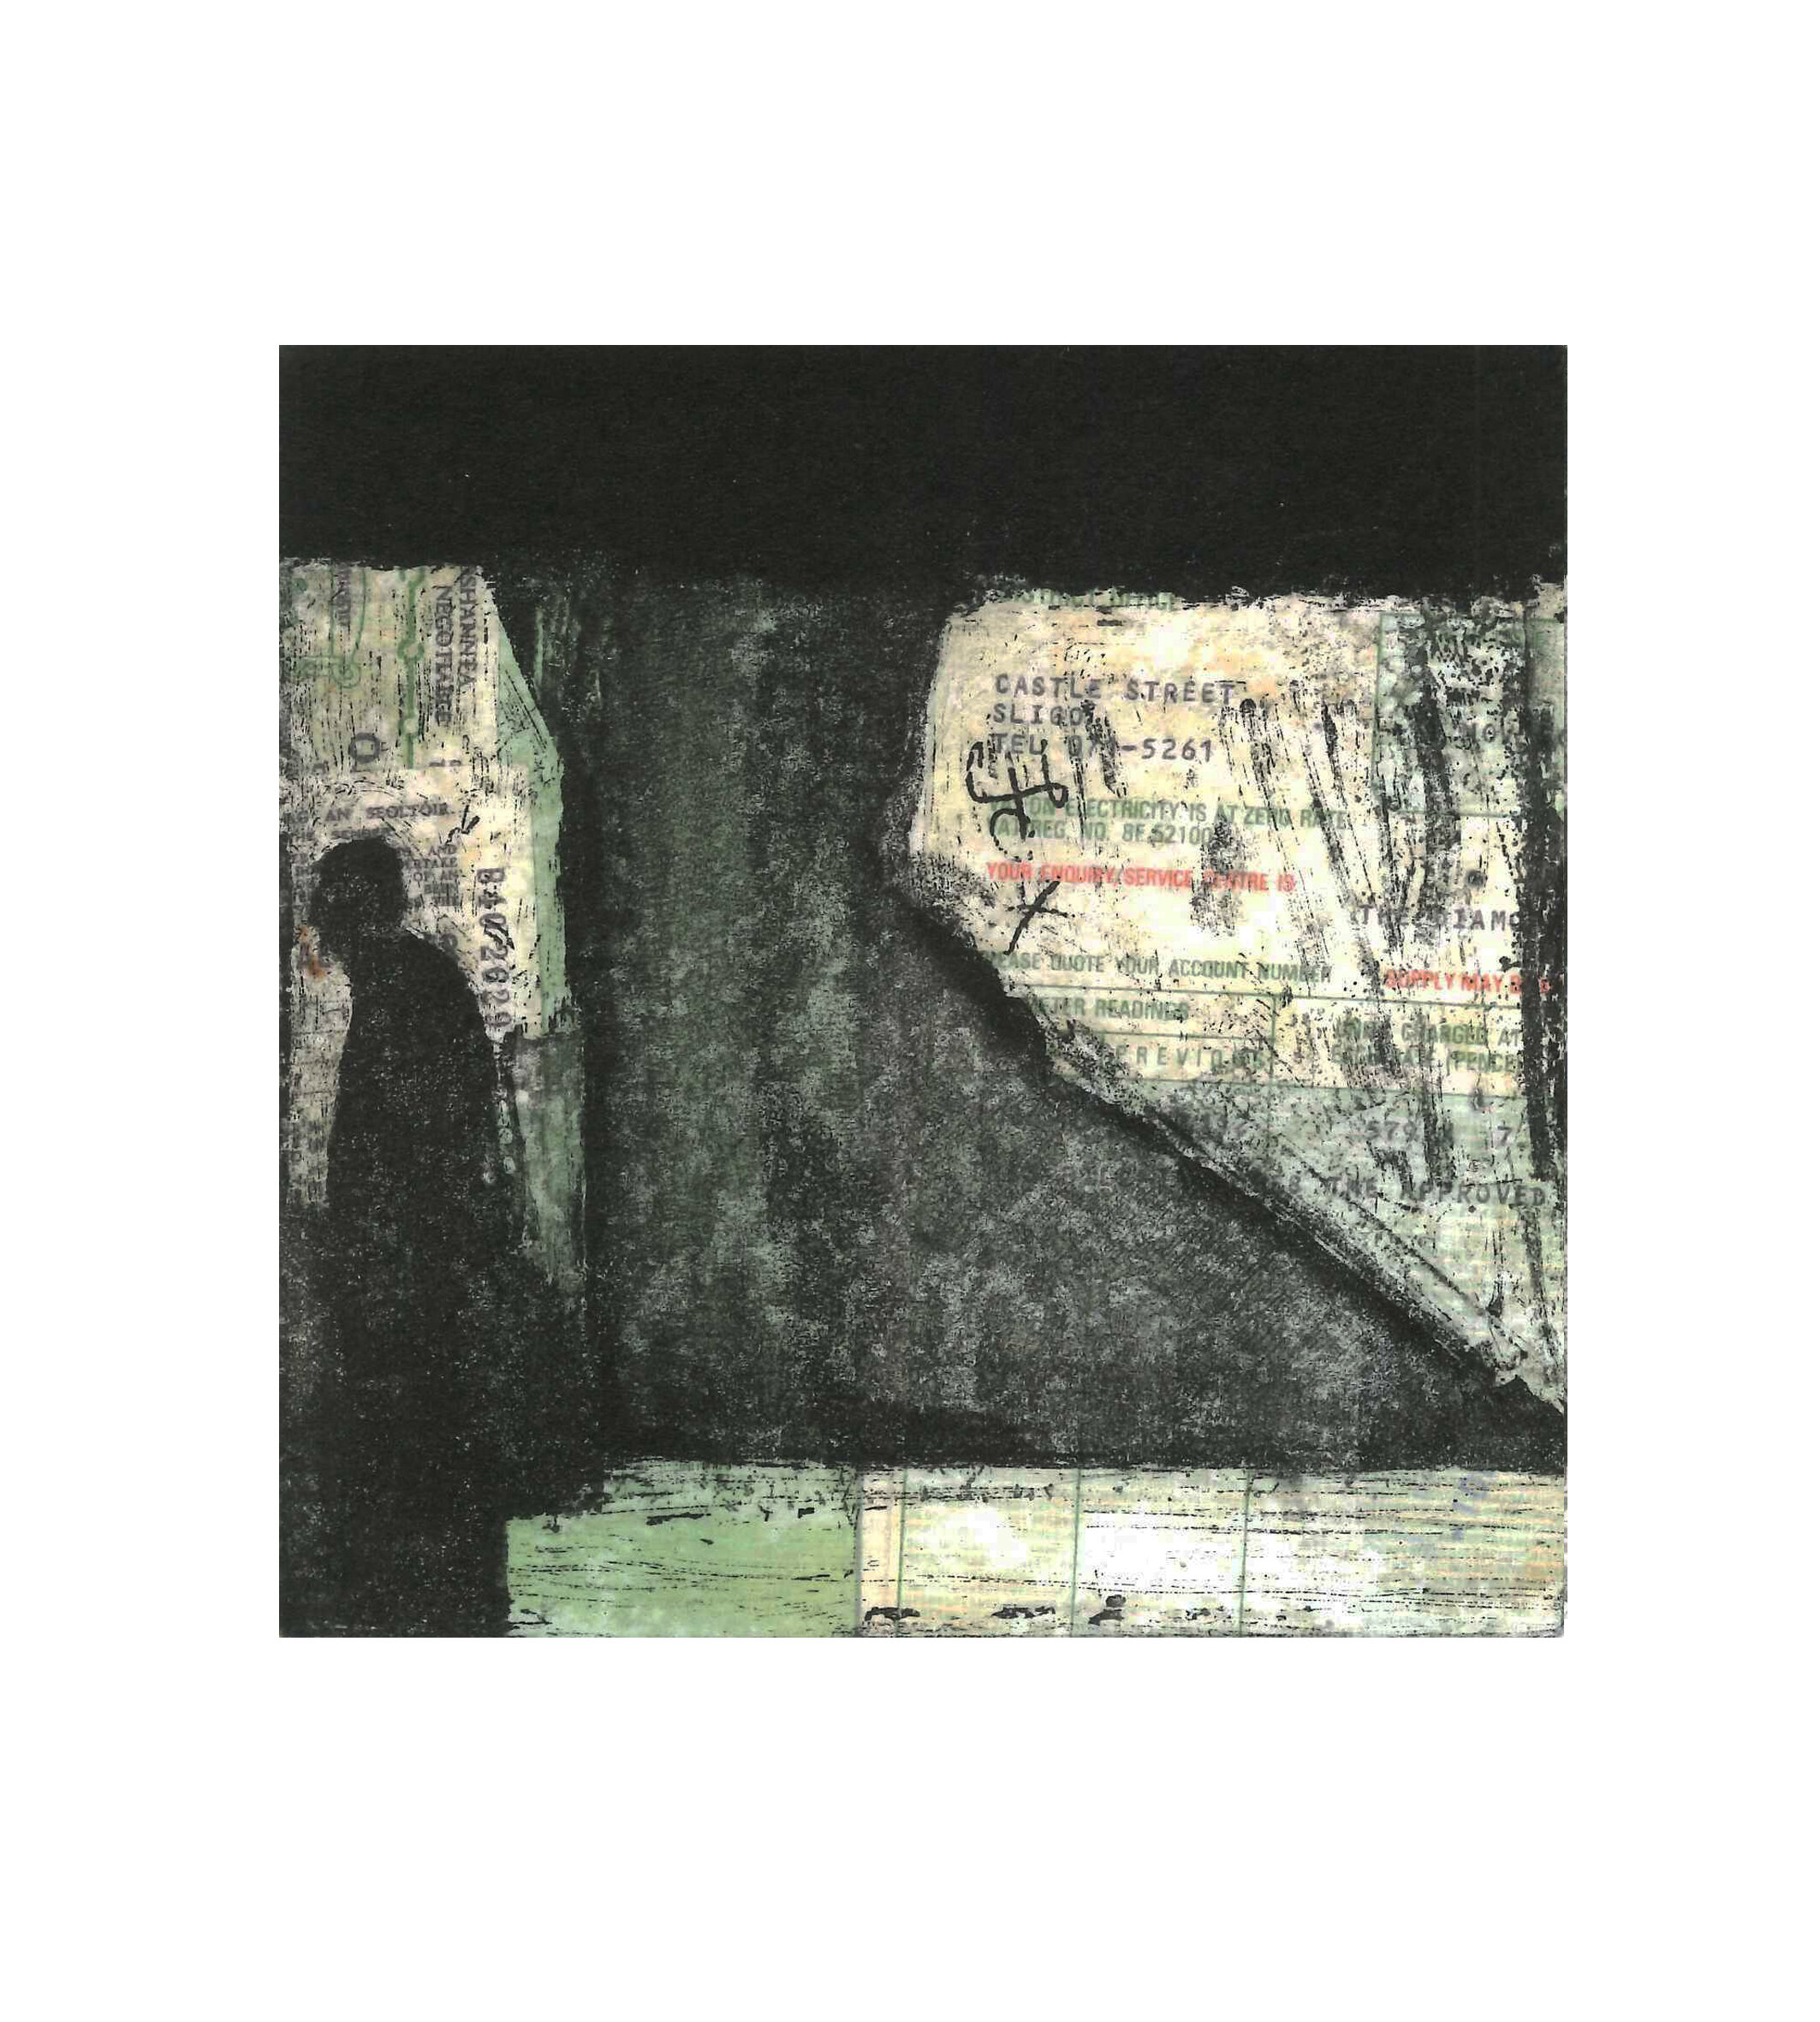   92 Farquhar St, No. 08 , photo etching, chine colle, 16cm x 16cm, 2016 